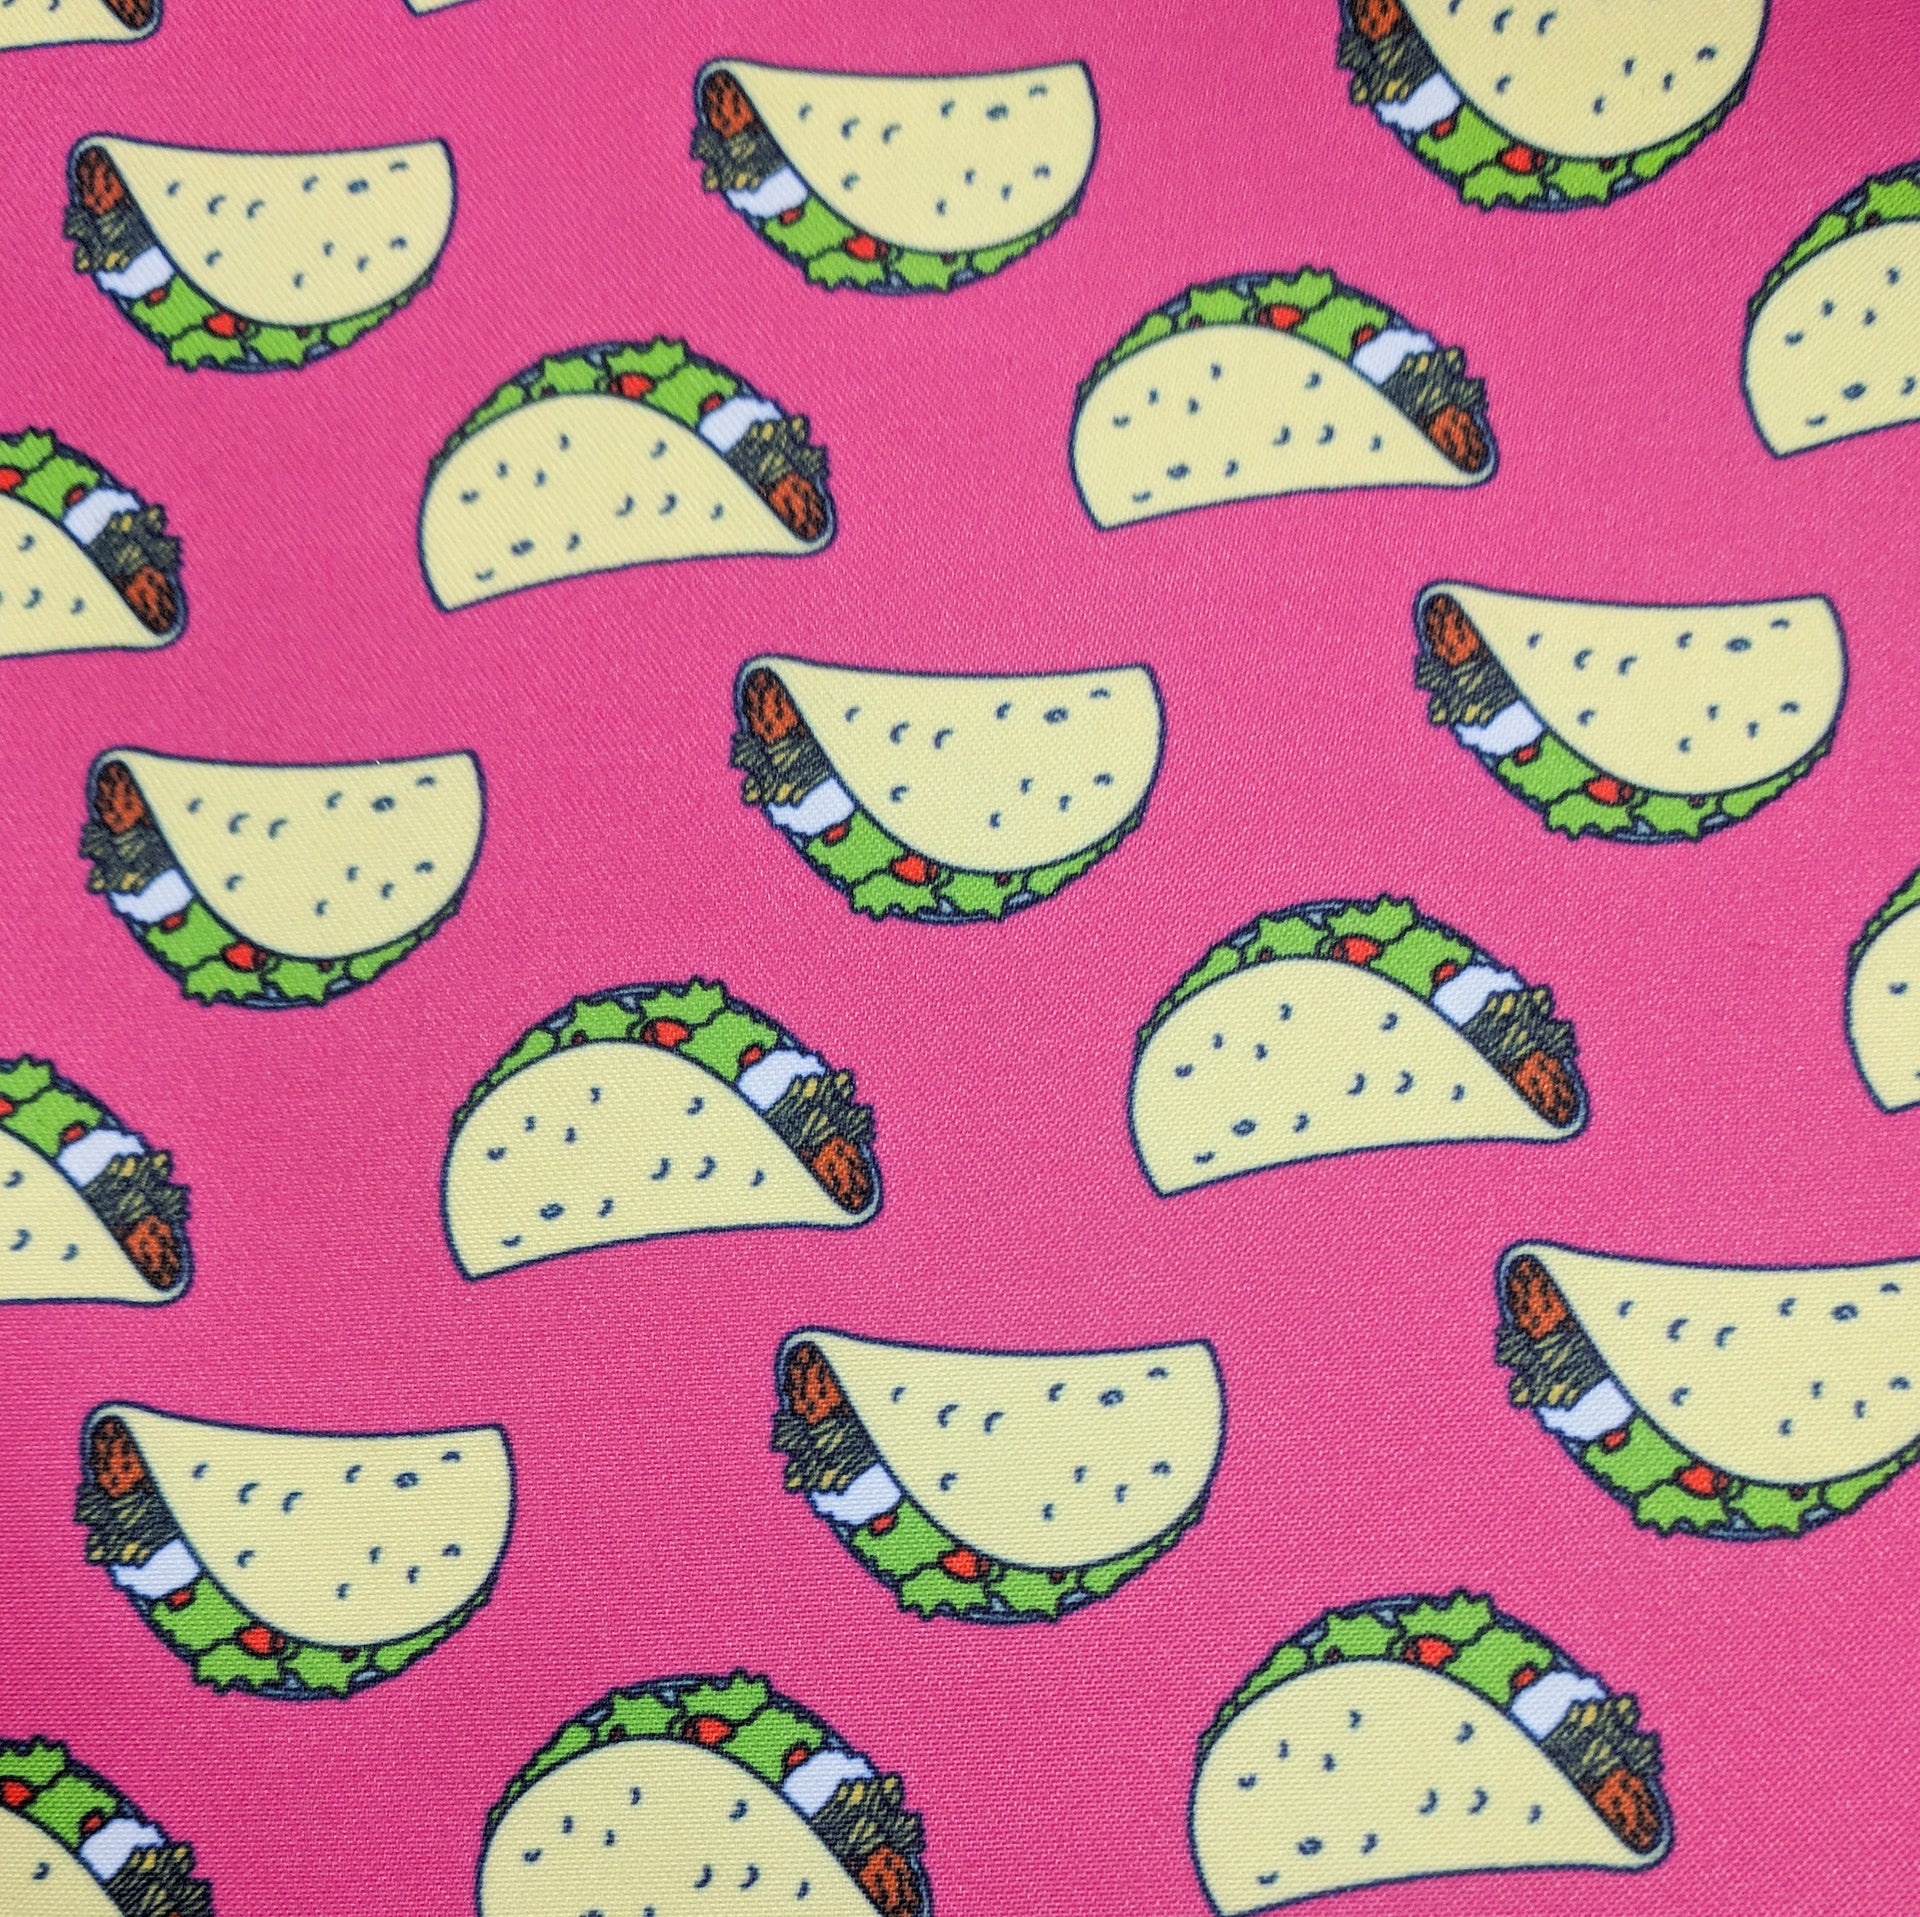 I <3 Tacos! Limited Edition Inspiration